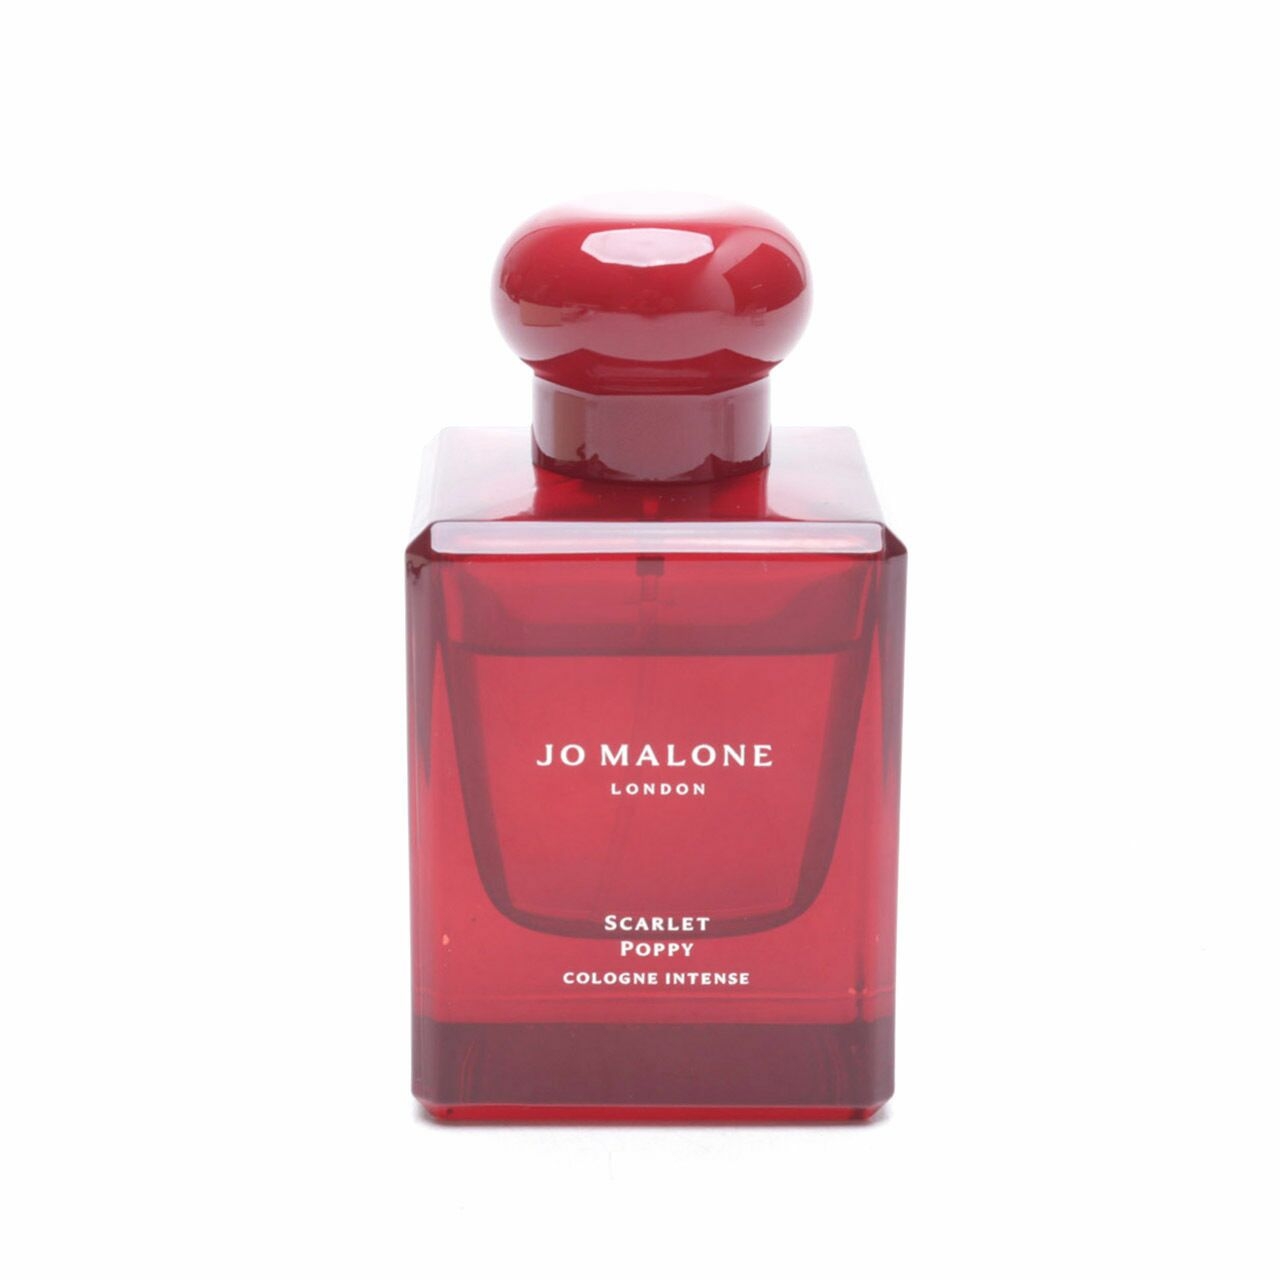 Jo Malone Scarlet Poppy Cologne Intense  Fragrance